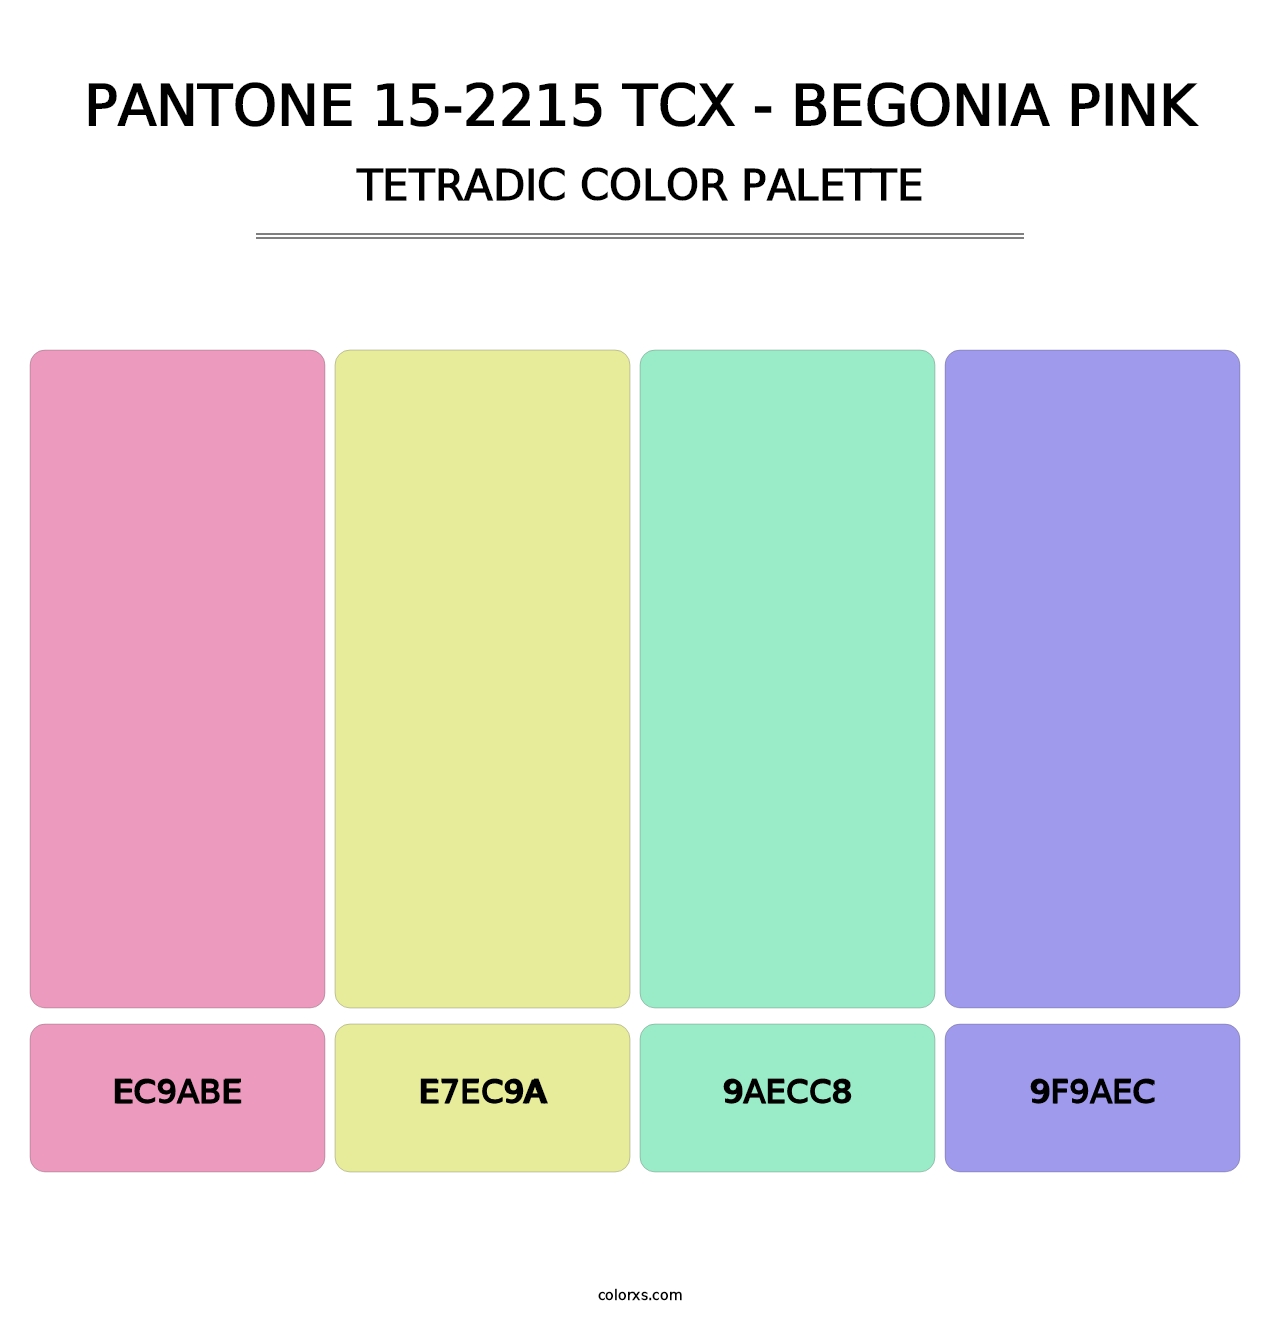 PANTONE 15-2215 TCX - Begonia Pink - Tetradic Color Palette